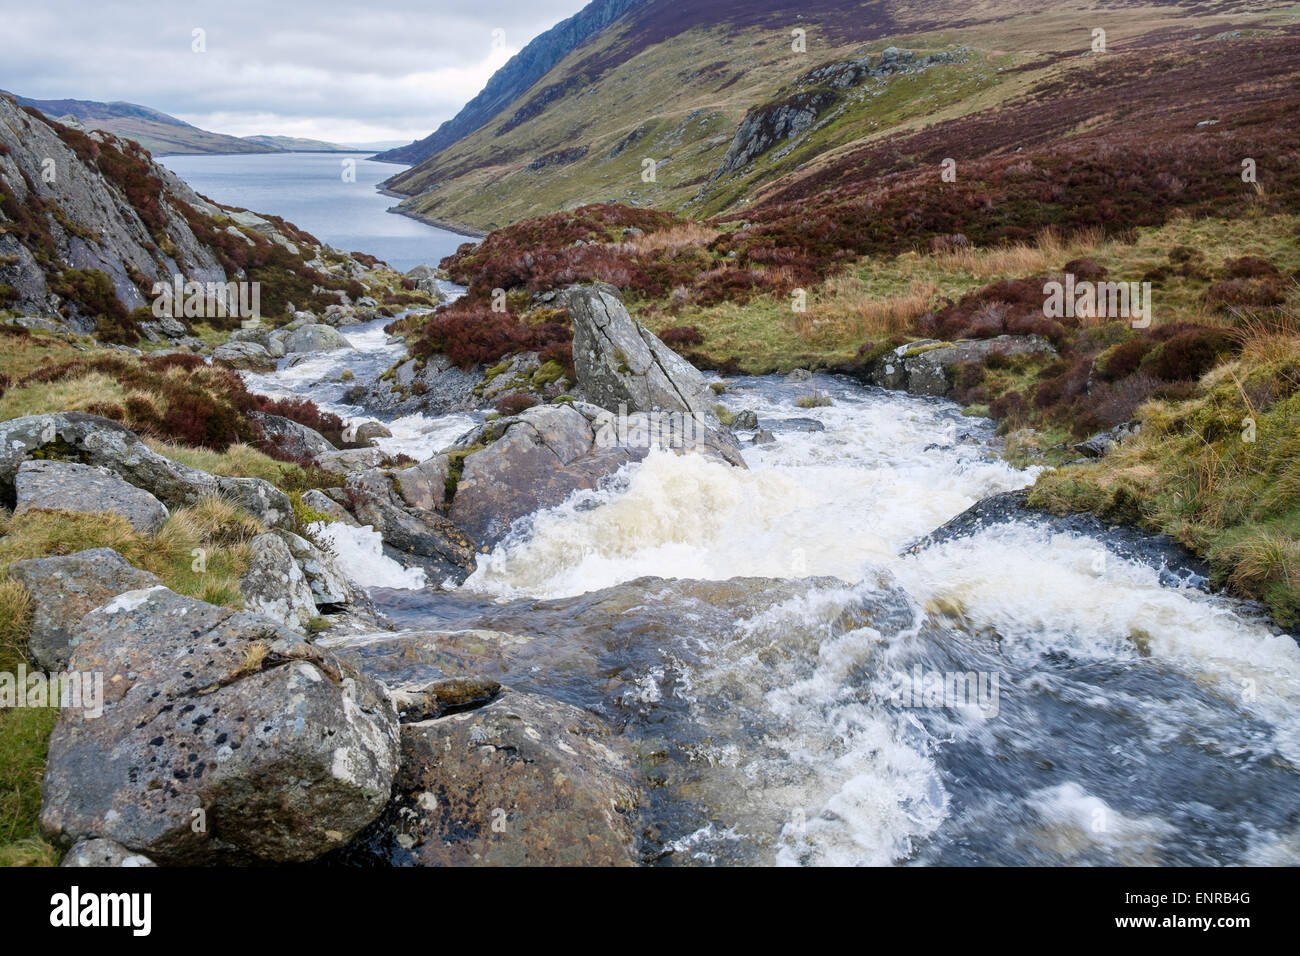 Fast flowing water in rocky mountain stream feeding Llyn Cowlyd Reservoir after rain in Carneddau mountains of Snowdonia National Park Eryri Wales UK Stock Photo